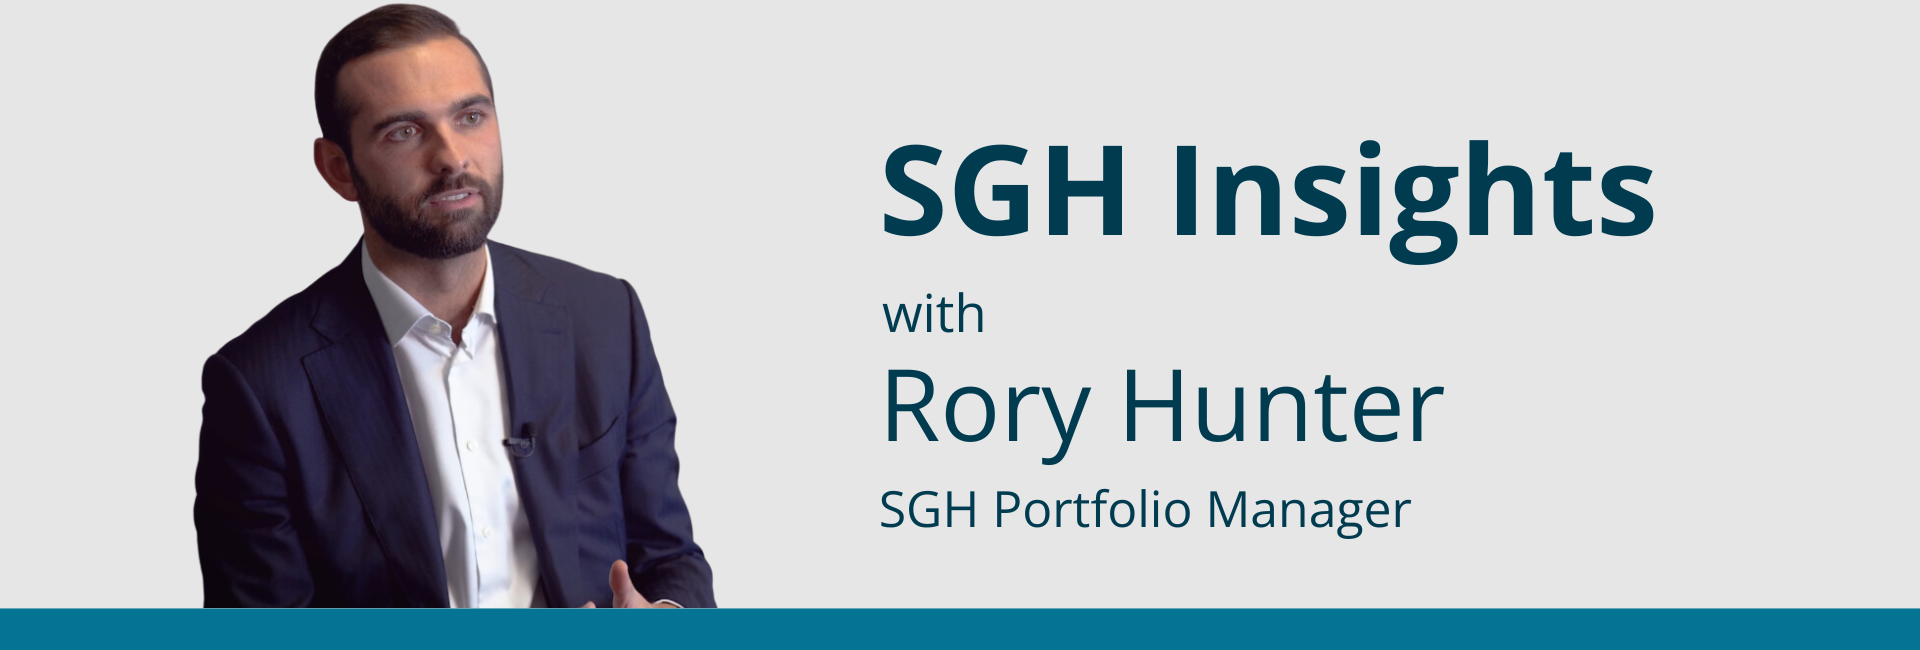 Rory Hunter - SGH Insights